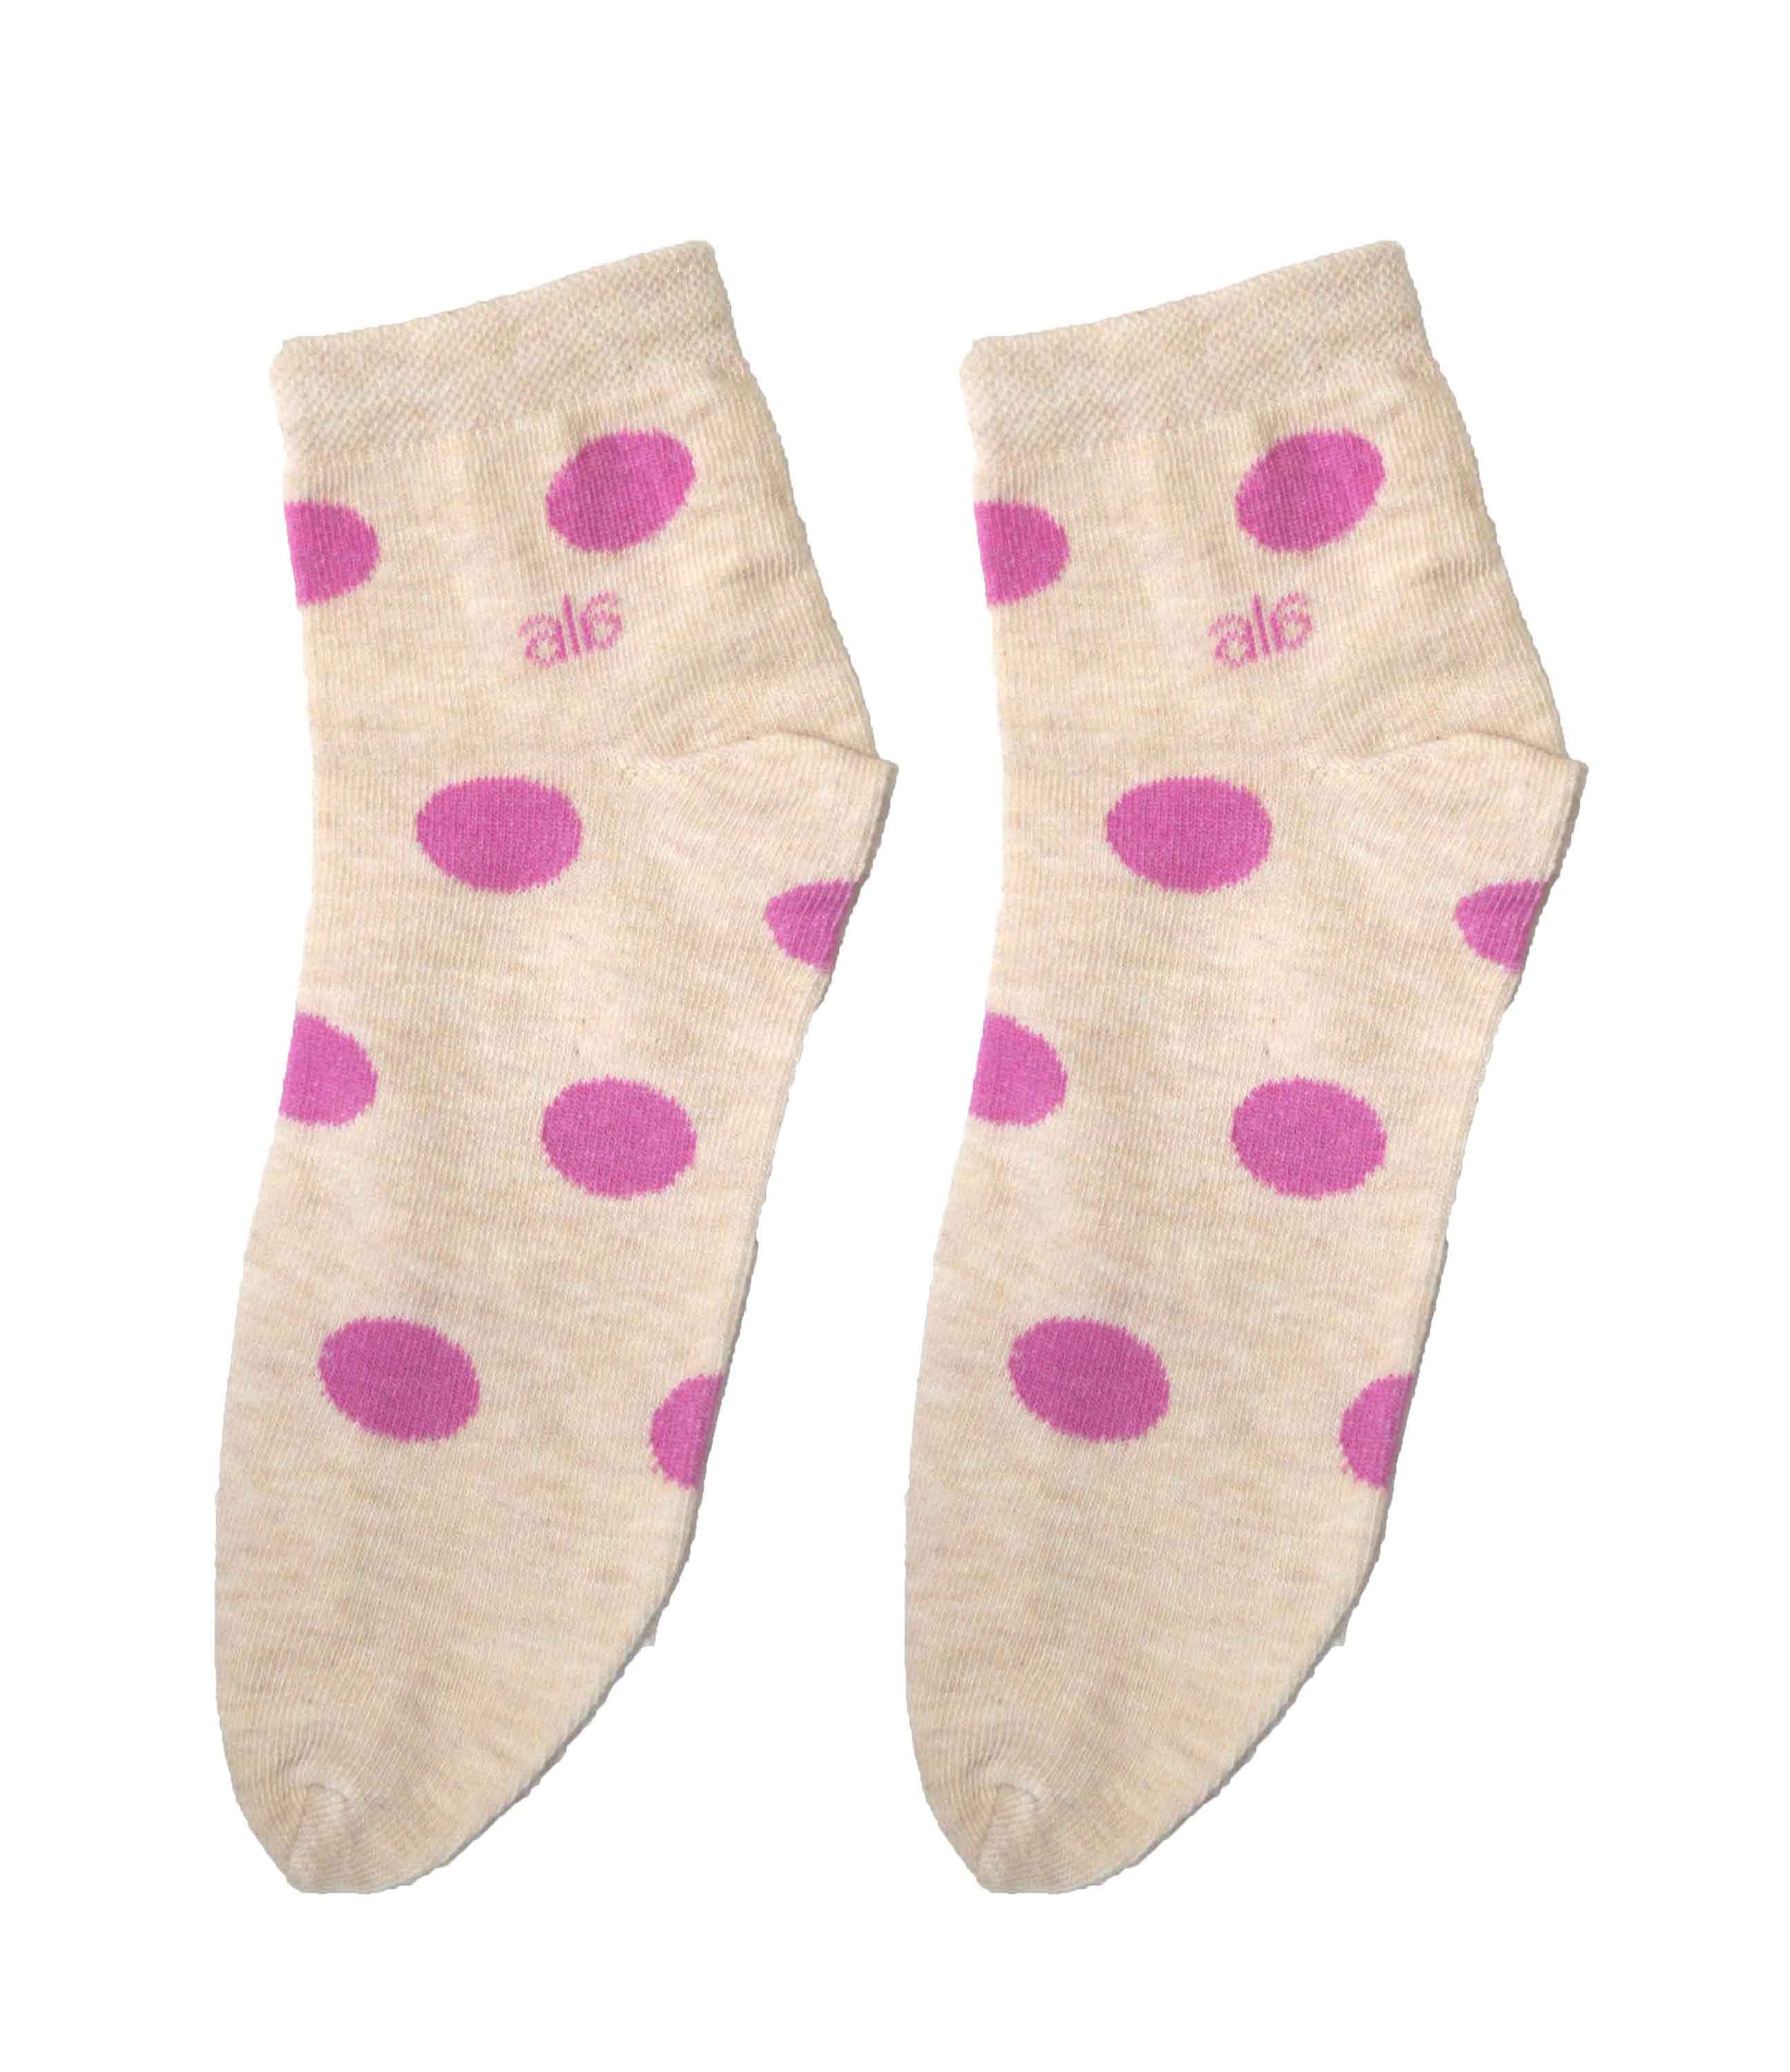 Ellie Wmn ankle Socks - Design-BG-Wmn-DESIGN-006-Skin